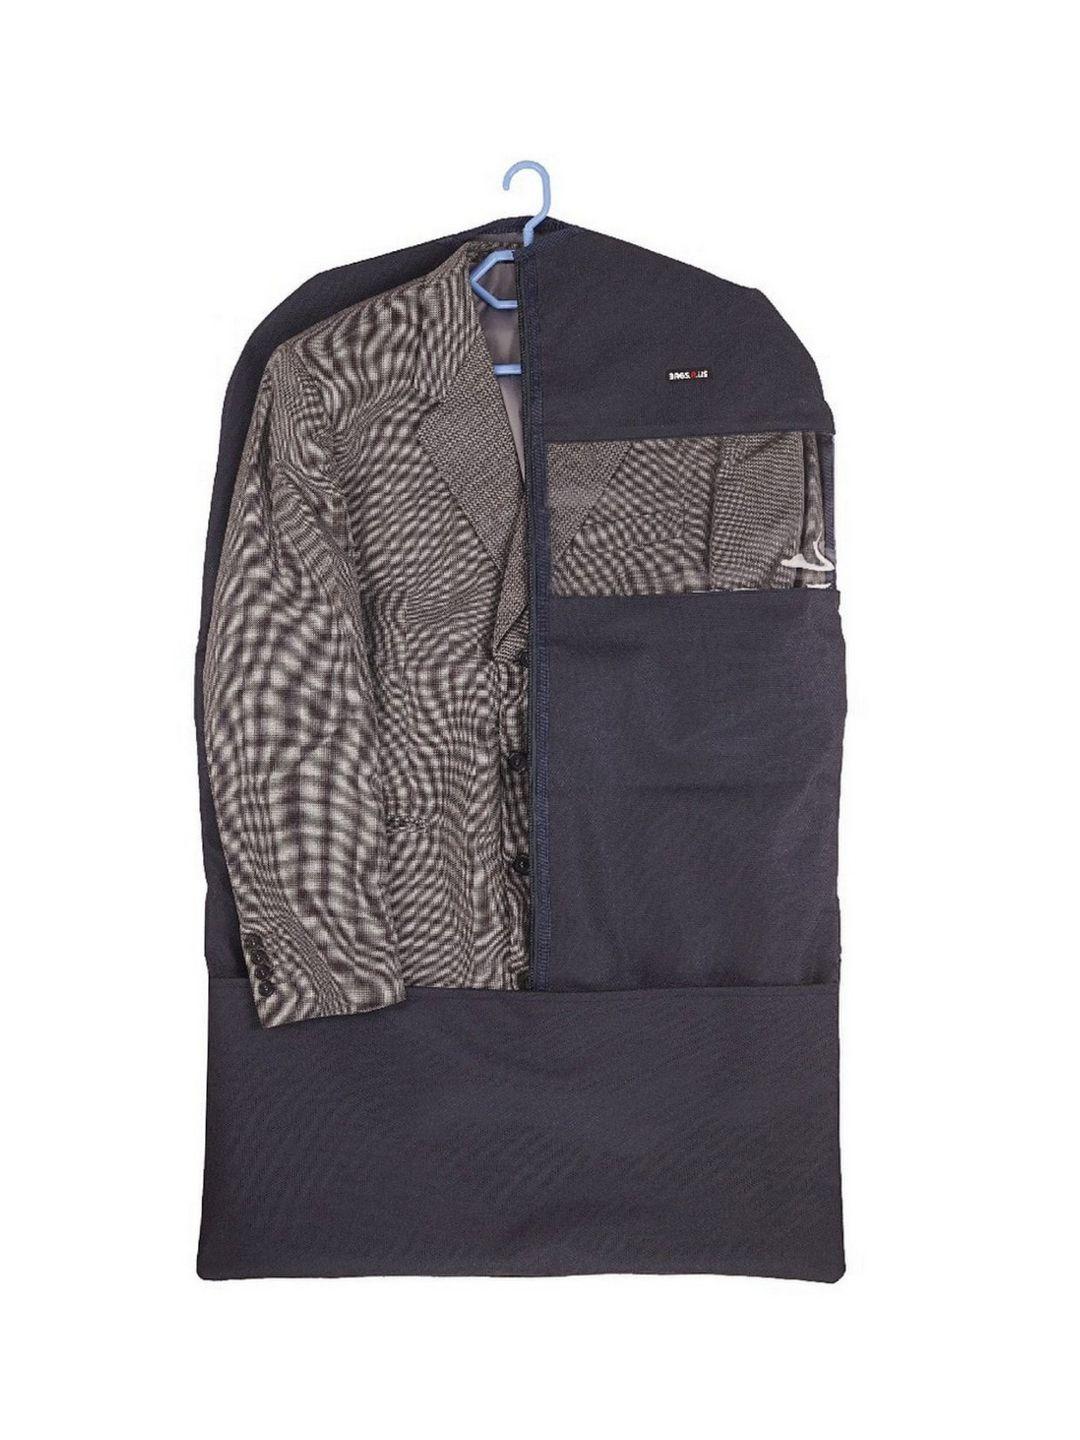 bags.r.us unisex matte navy blue 3.1 liters large suit/garment cover with handle